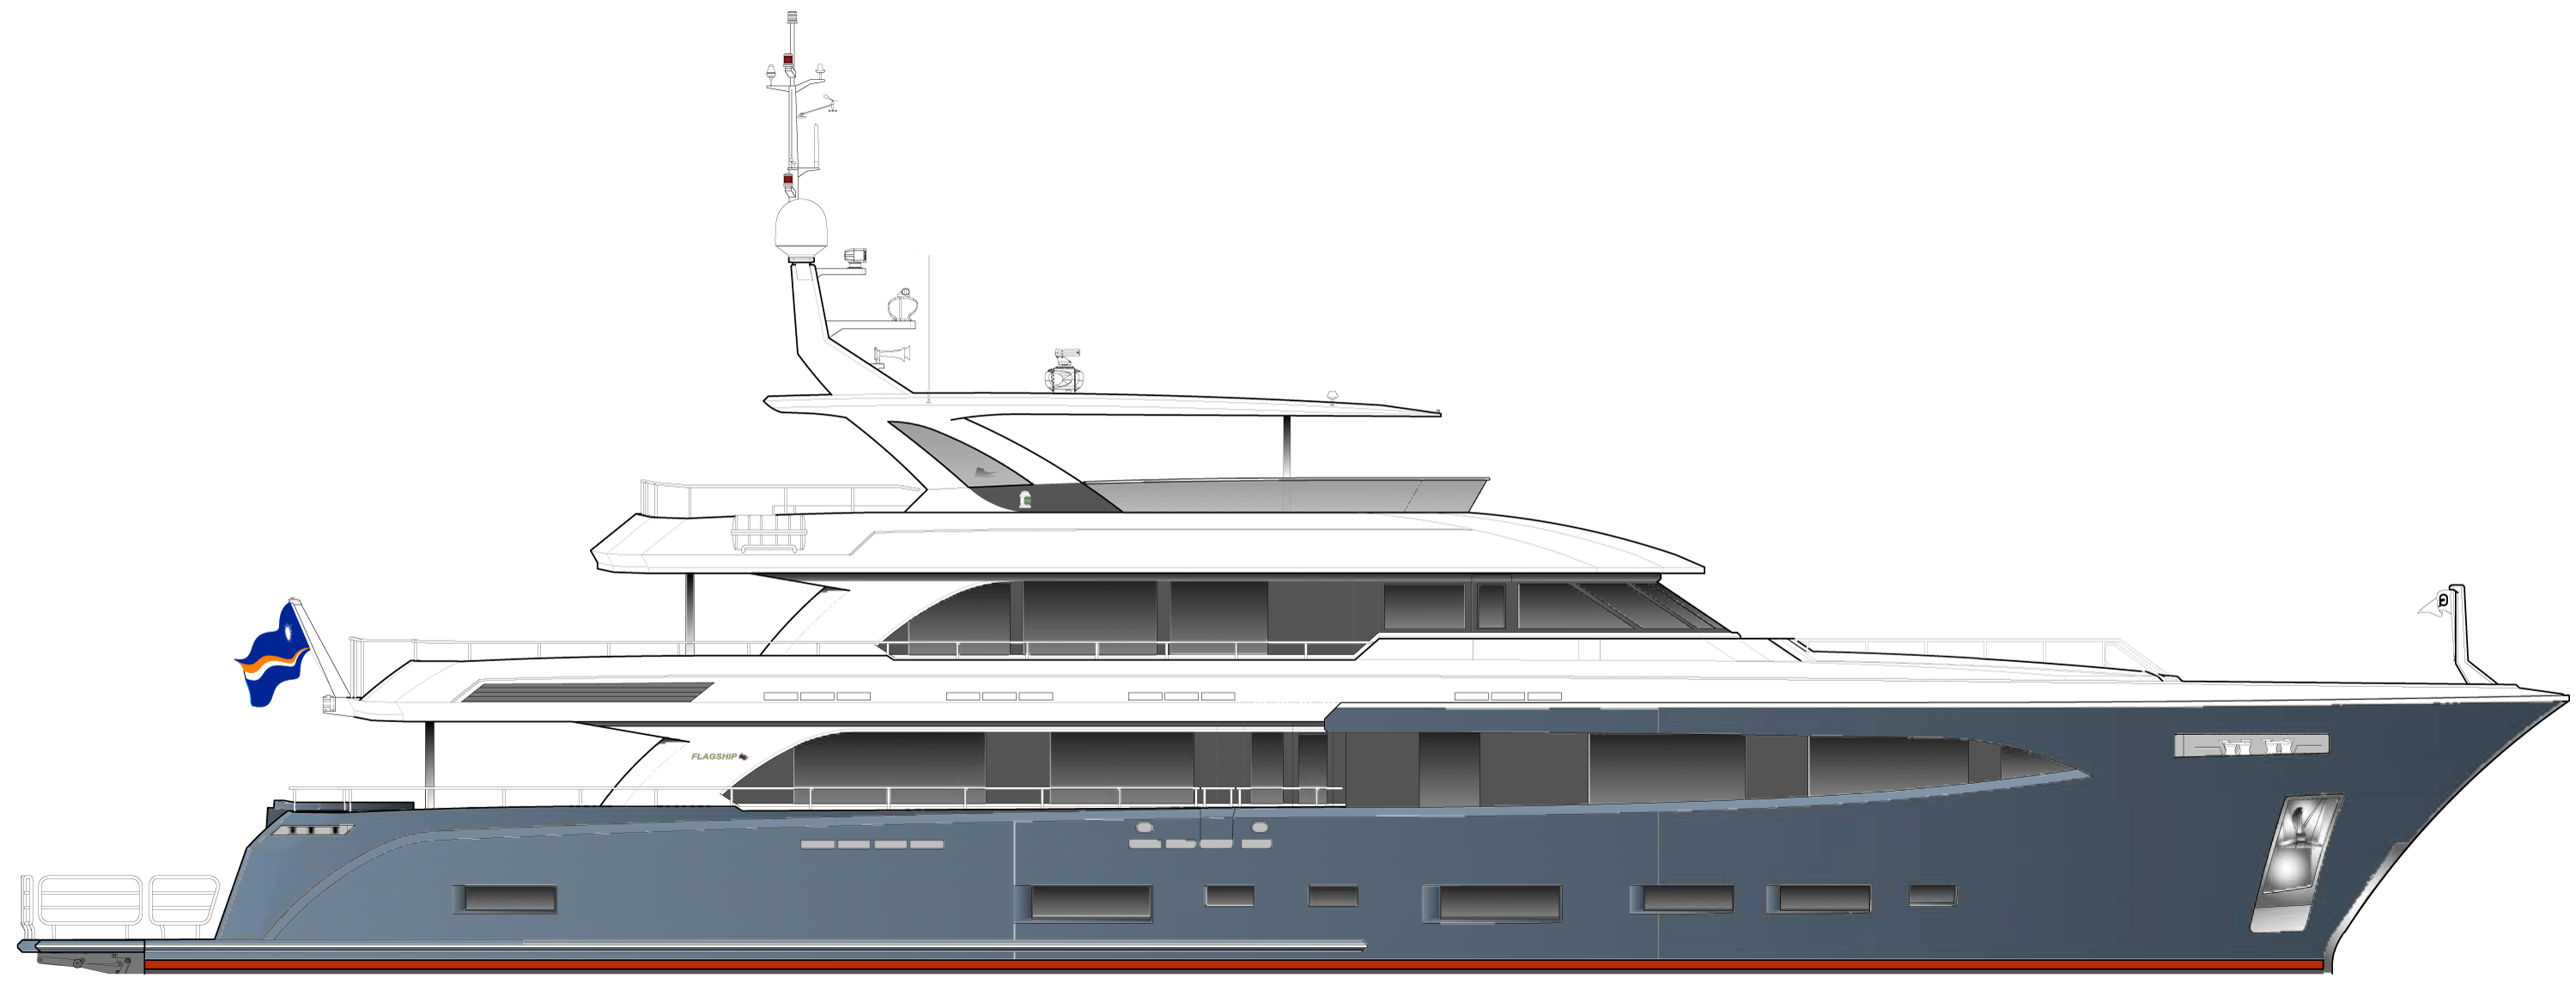 superyacht 153